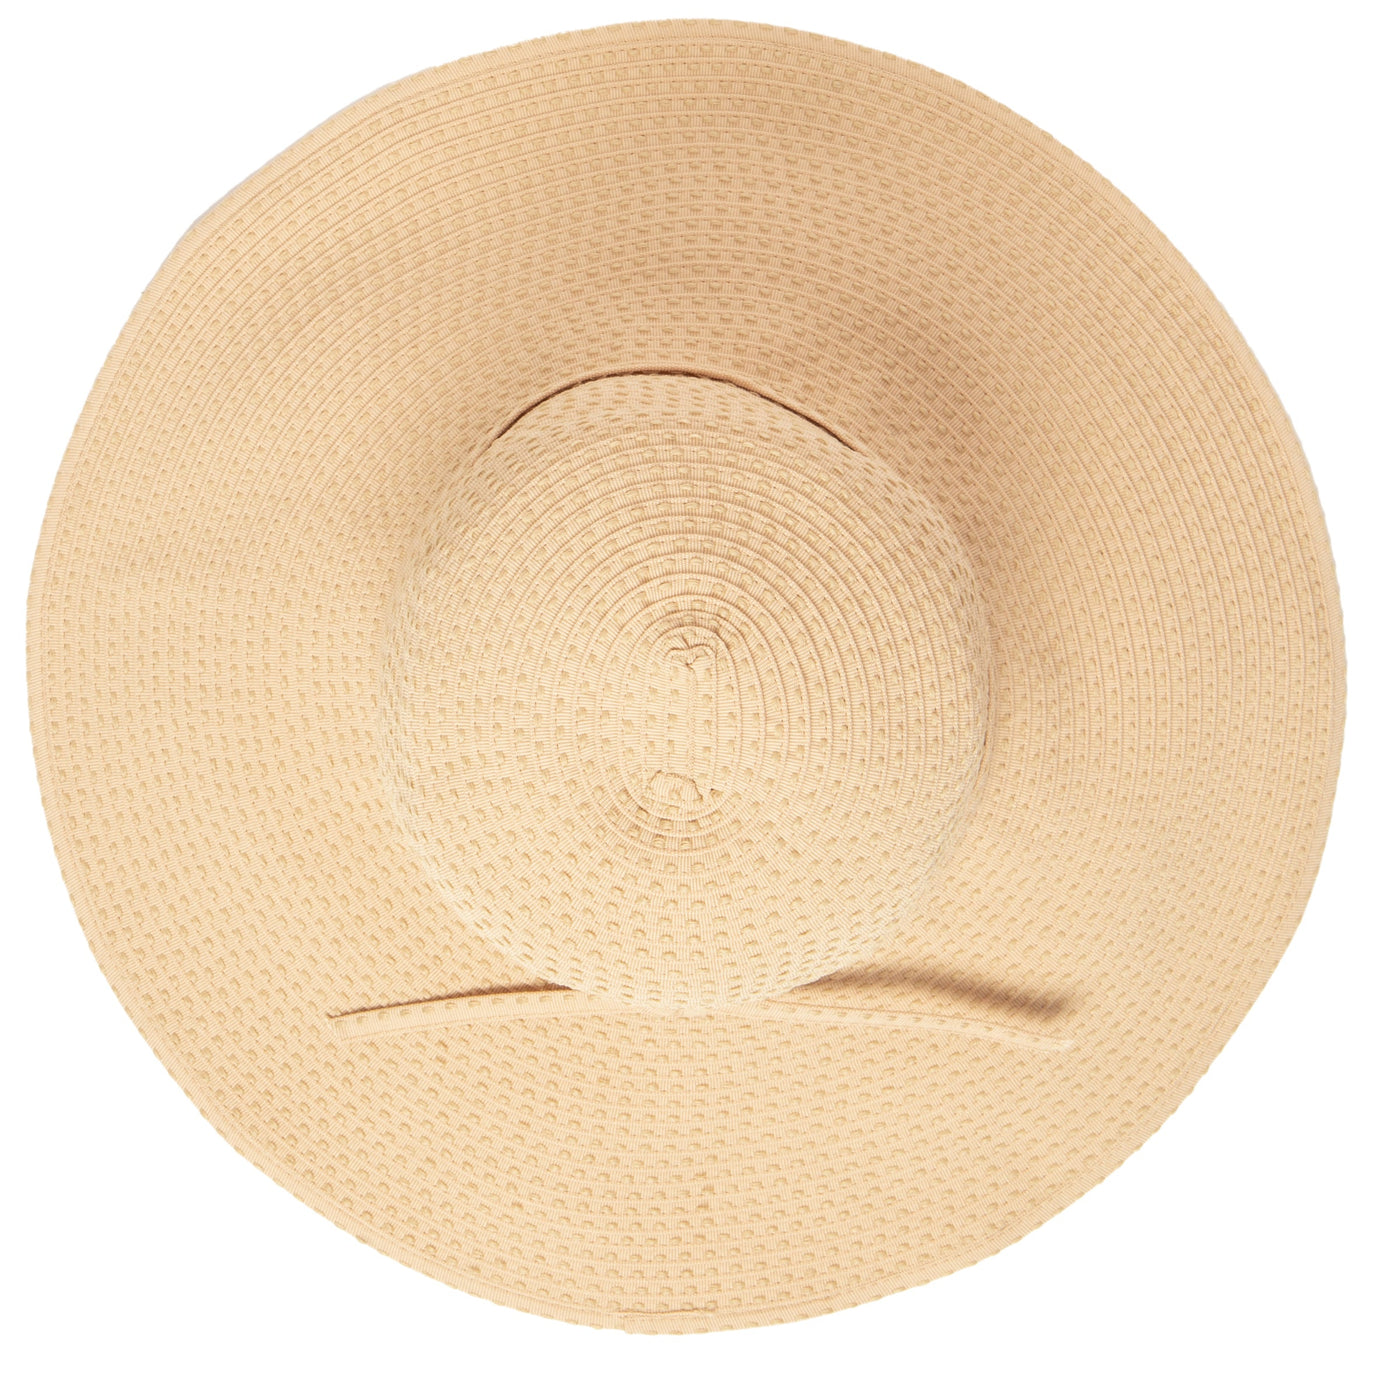 Women's Ribbon Braid Hat with Ticking – San Diego Hat Company